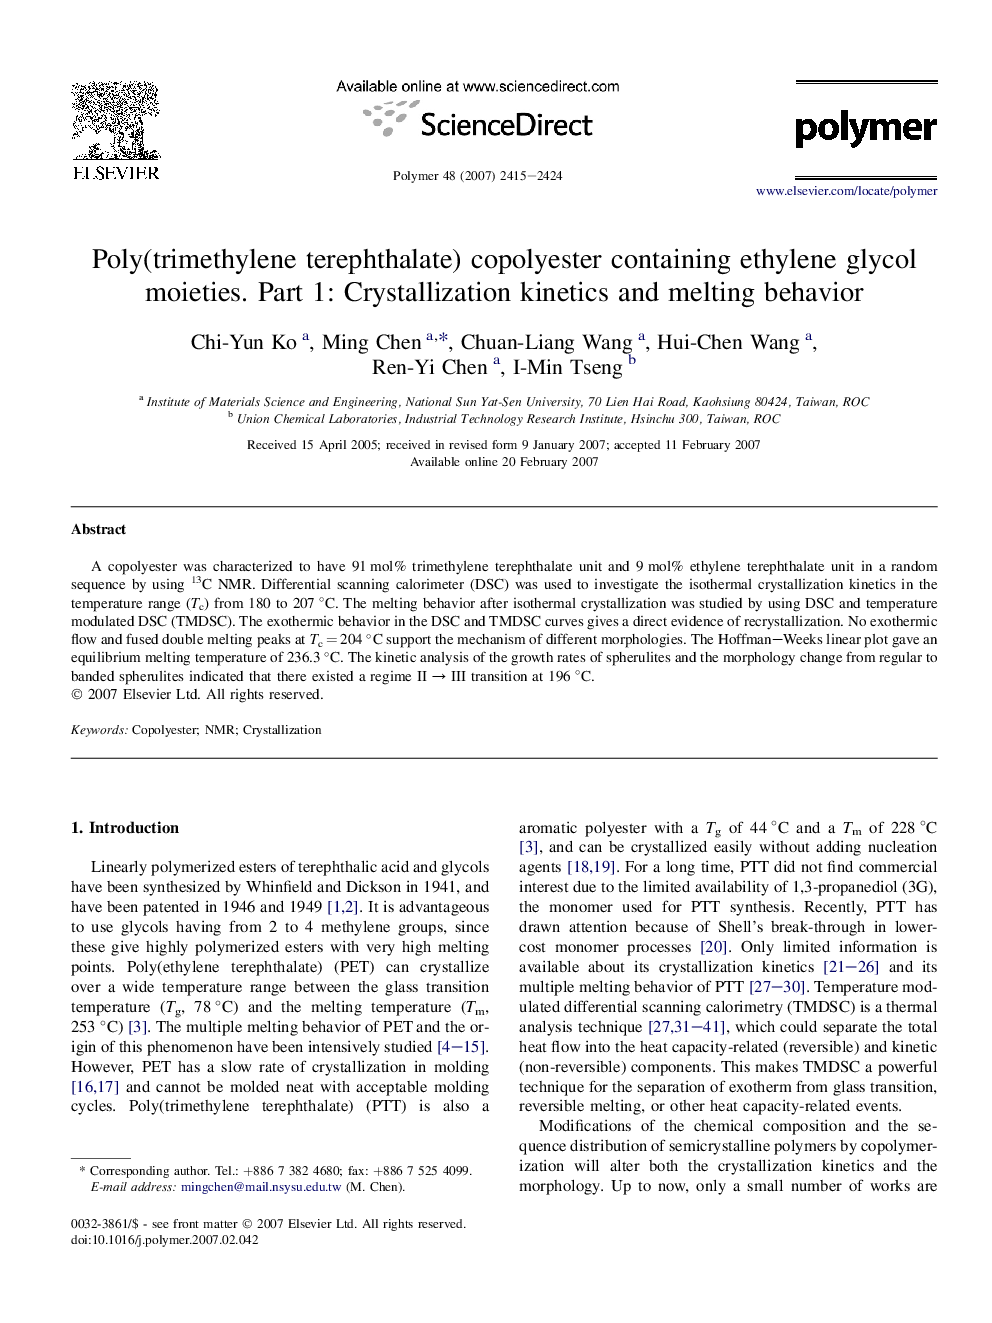 Poly(trimethylene terephthalate) copolyester containing ethylene glycol moieties. Part 1: Crystallization kinetics and melting behavior